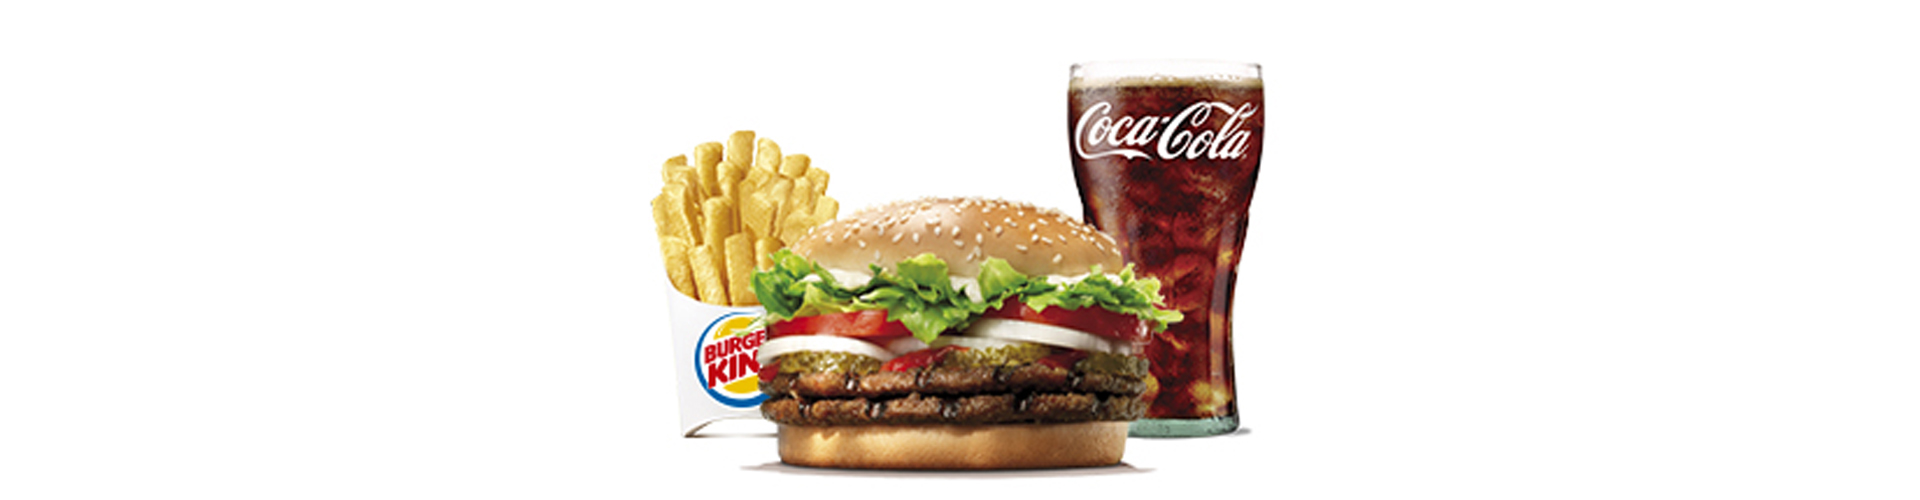 burgerking-40001708-limonada-ensalada-sandy_nutella